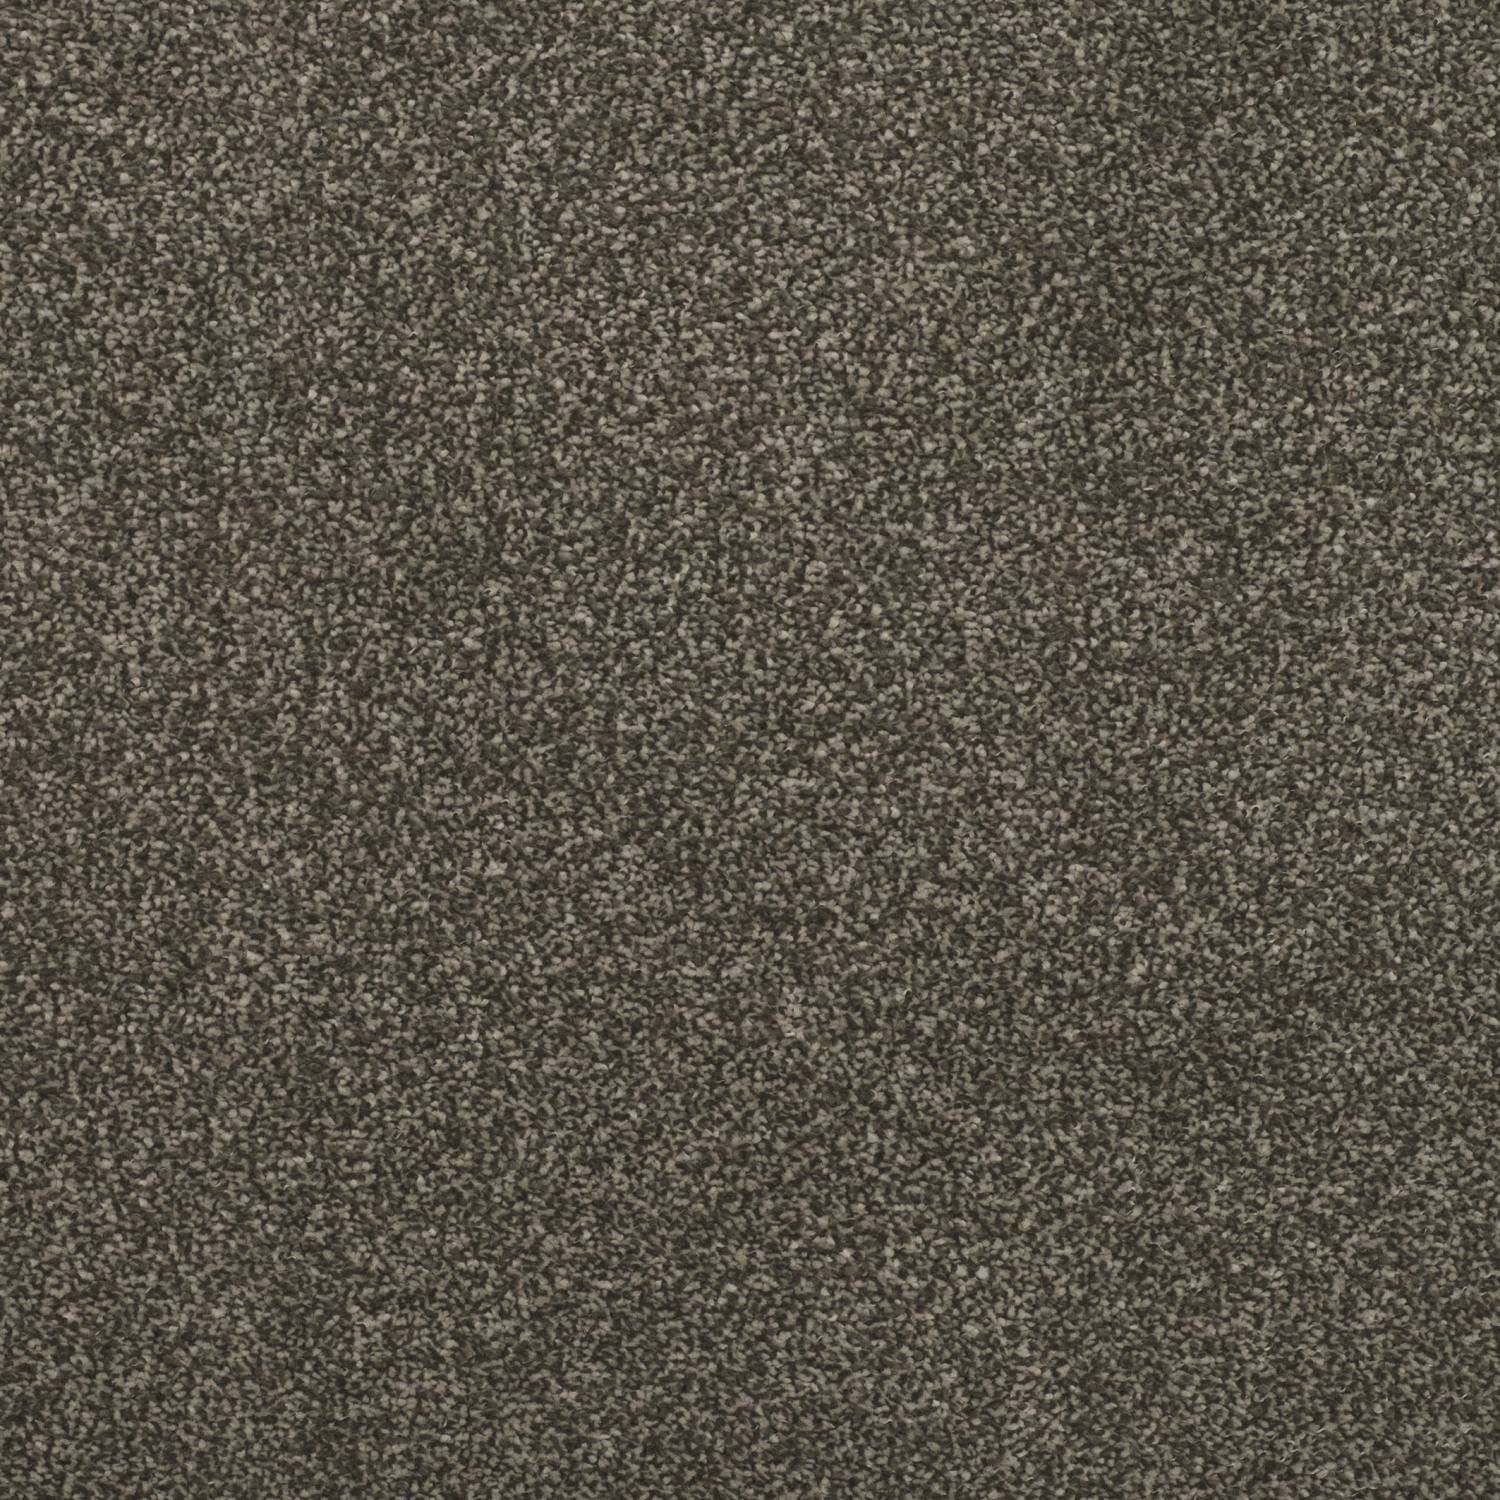 Obsession Twist Luxury Deep Pile Carpet - 794 Brushed Nickel